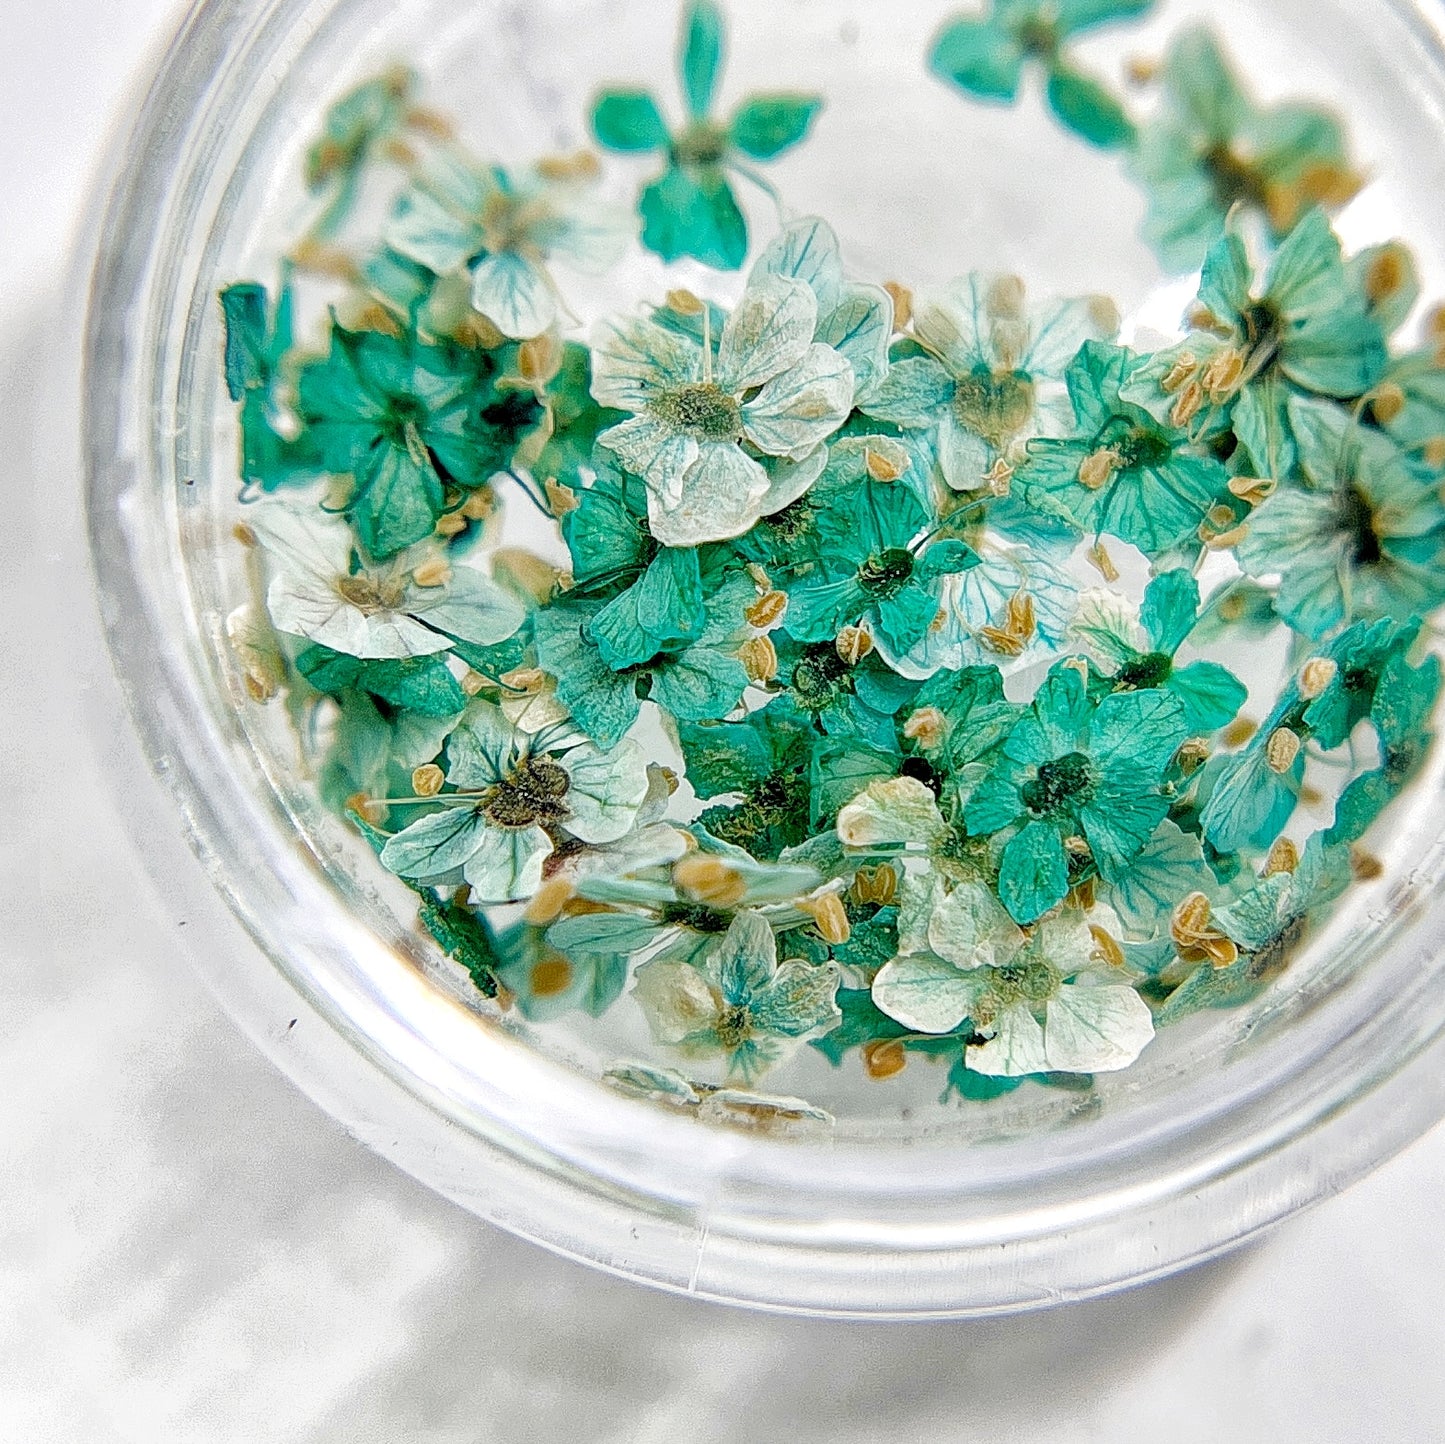 Petite Bloom in Marine - Multi-Tonal Teal Pressed Flower Mix in Jar, Presented on White Background.